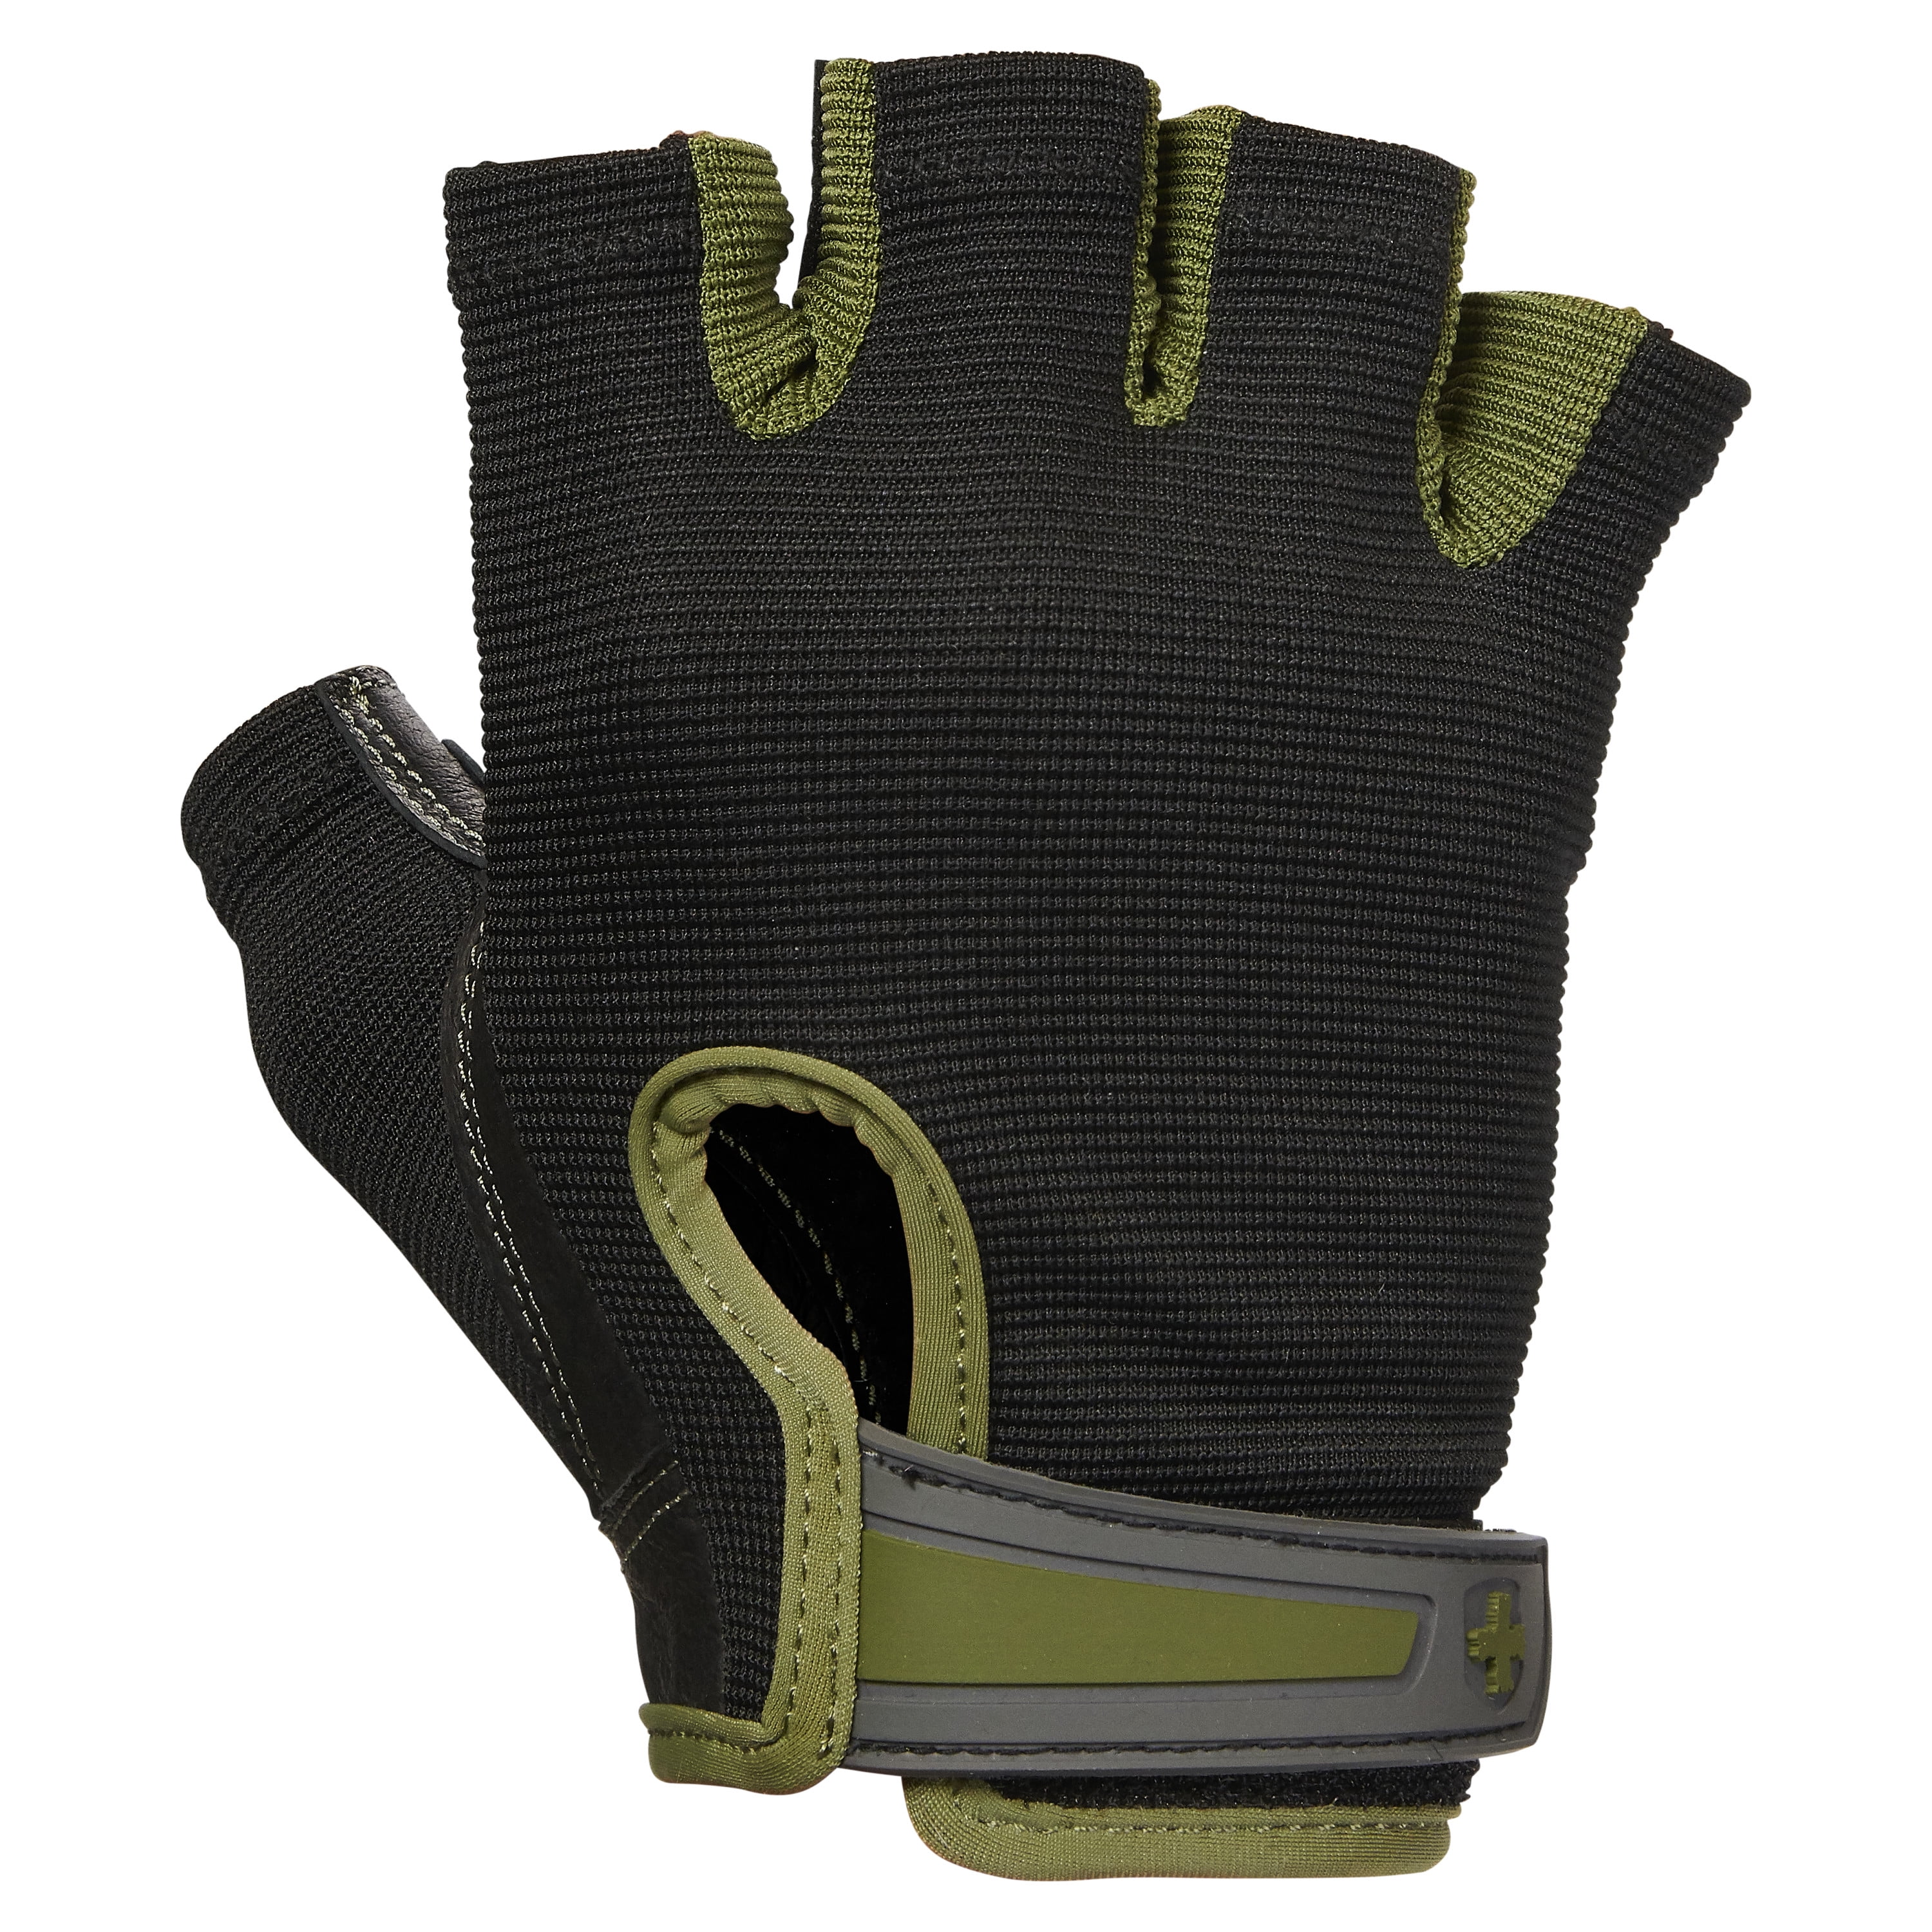  Harbinger Pro Weight Lifting Gloves, Medium, Black : Sports &  Outdoors